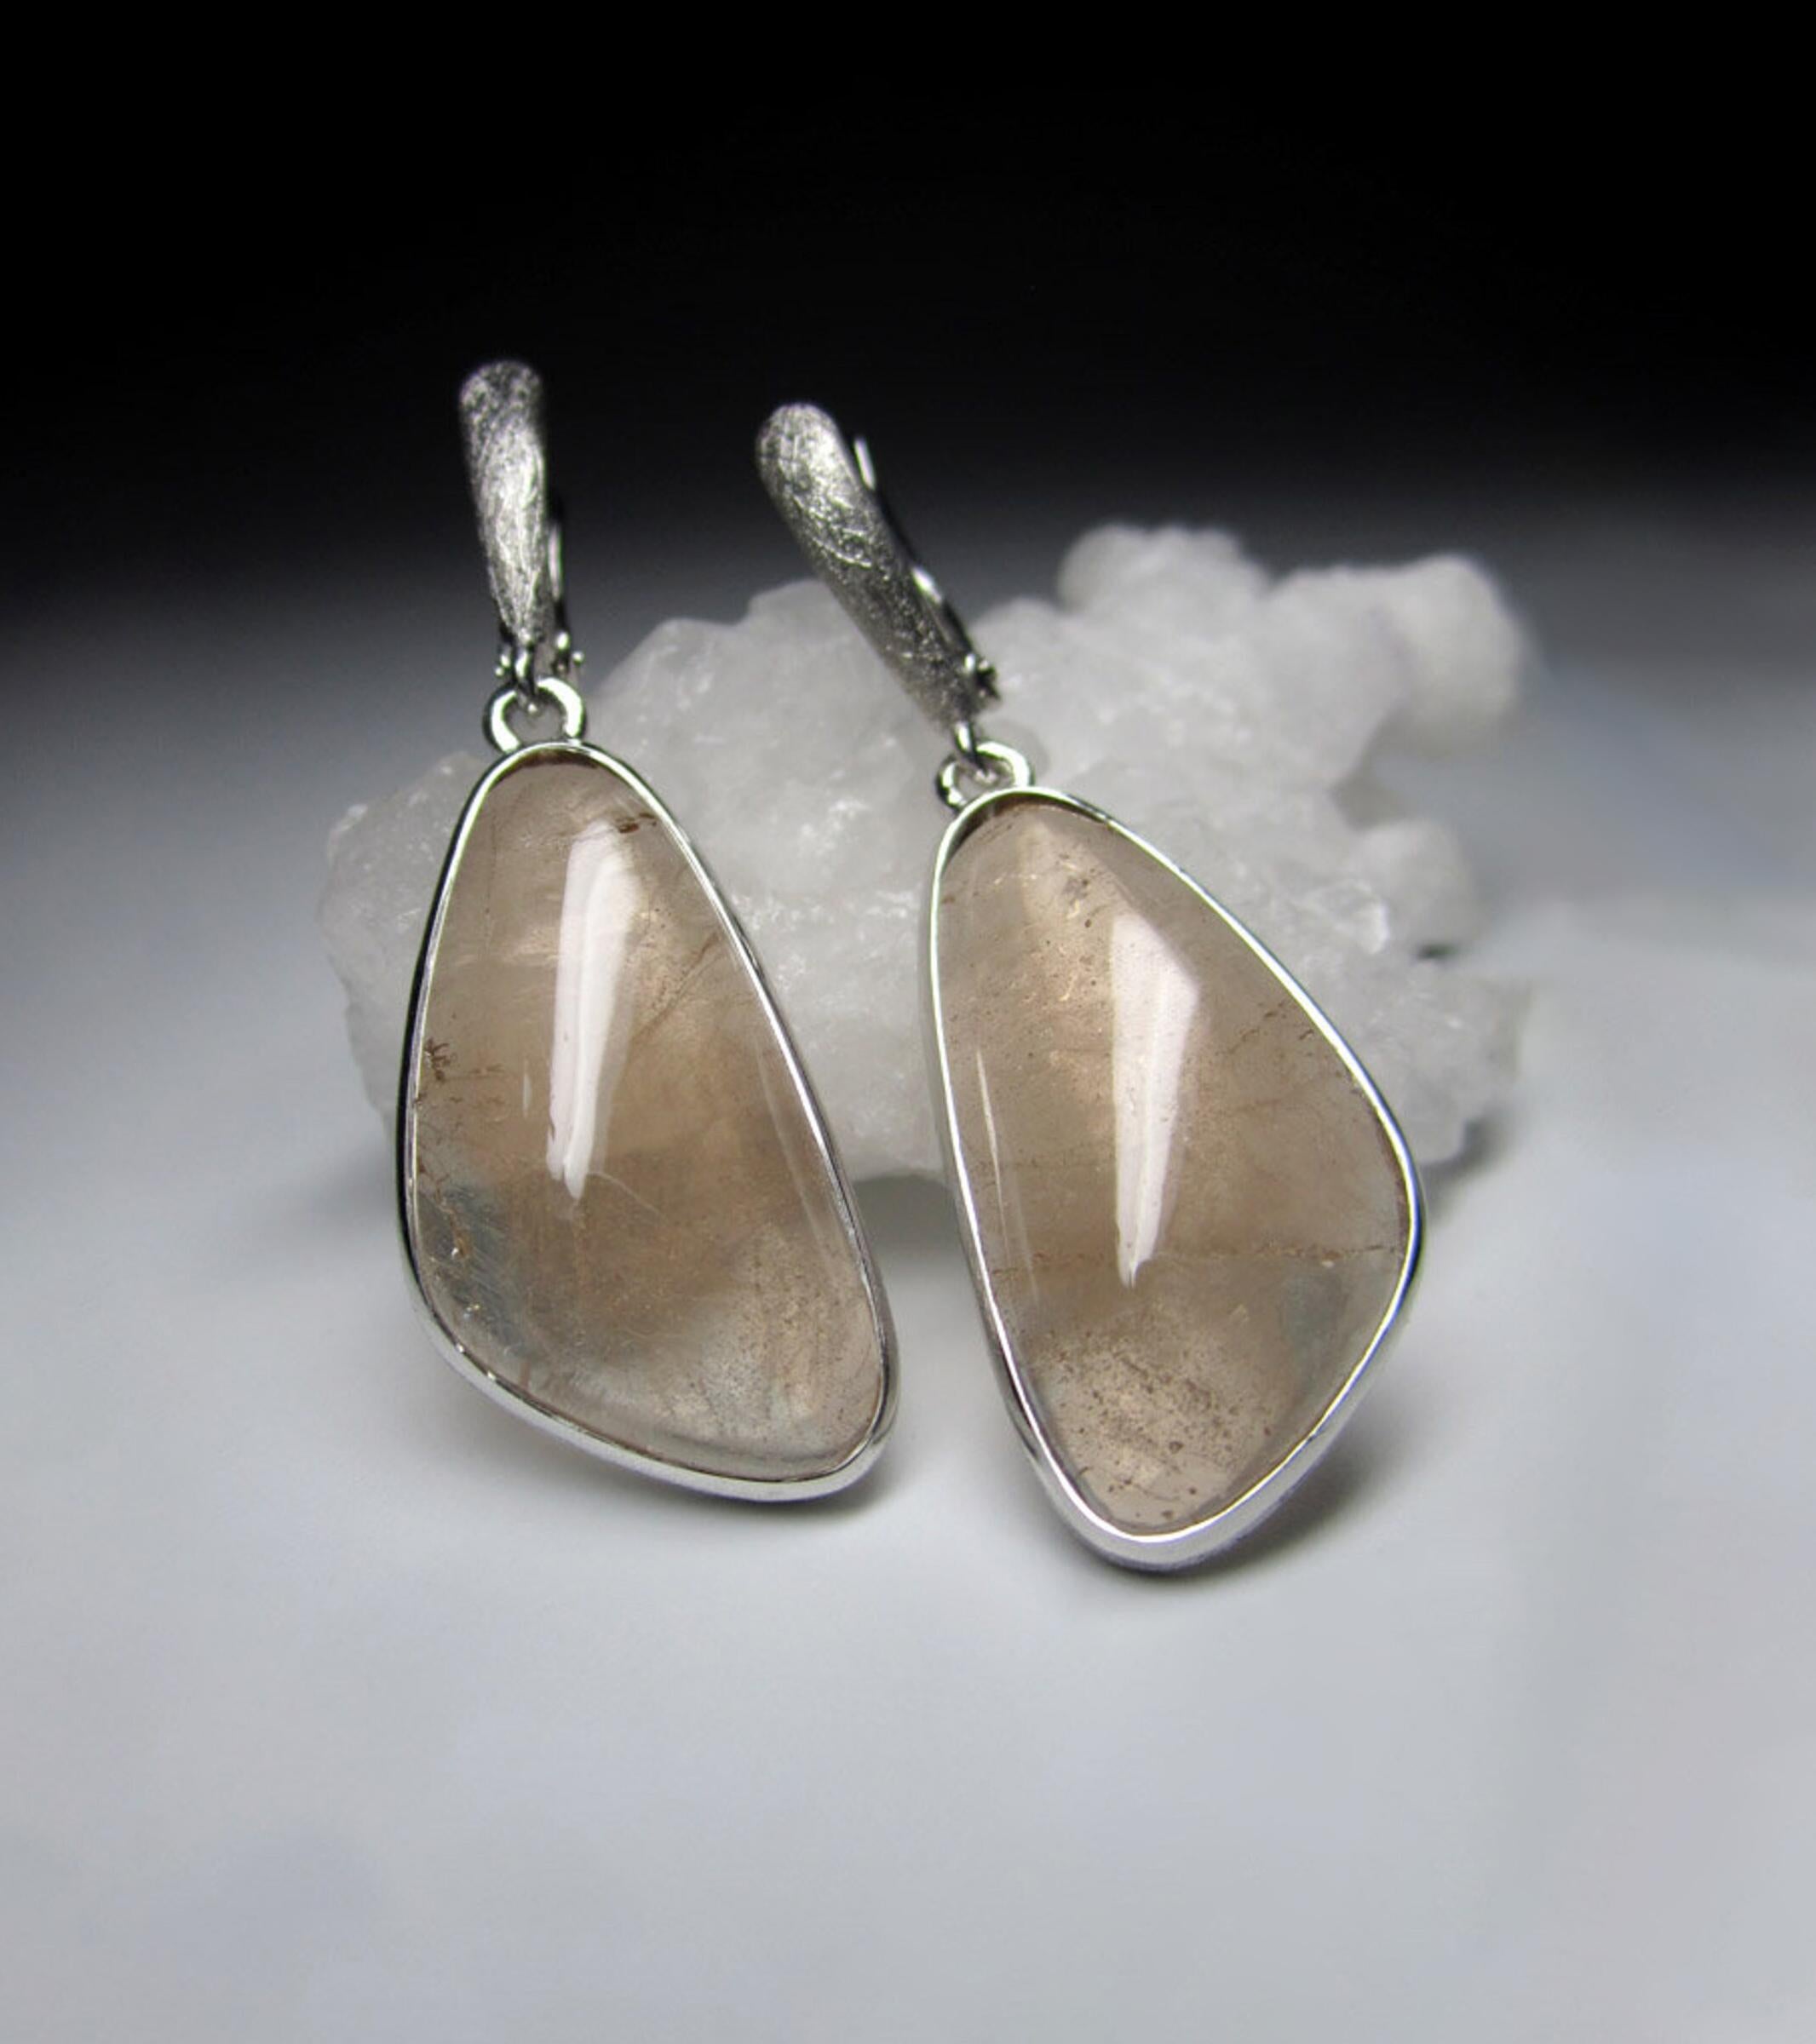 Scratched silver earrings with natural Topaz
gemstone size - 0.16 х 0.51 х 0.98 in / 4 х 13 х 25 mm
gemstone weight - 30 carat
earrings weight - 0.36 grams
earrings height - 1.65 in / 42 mm